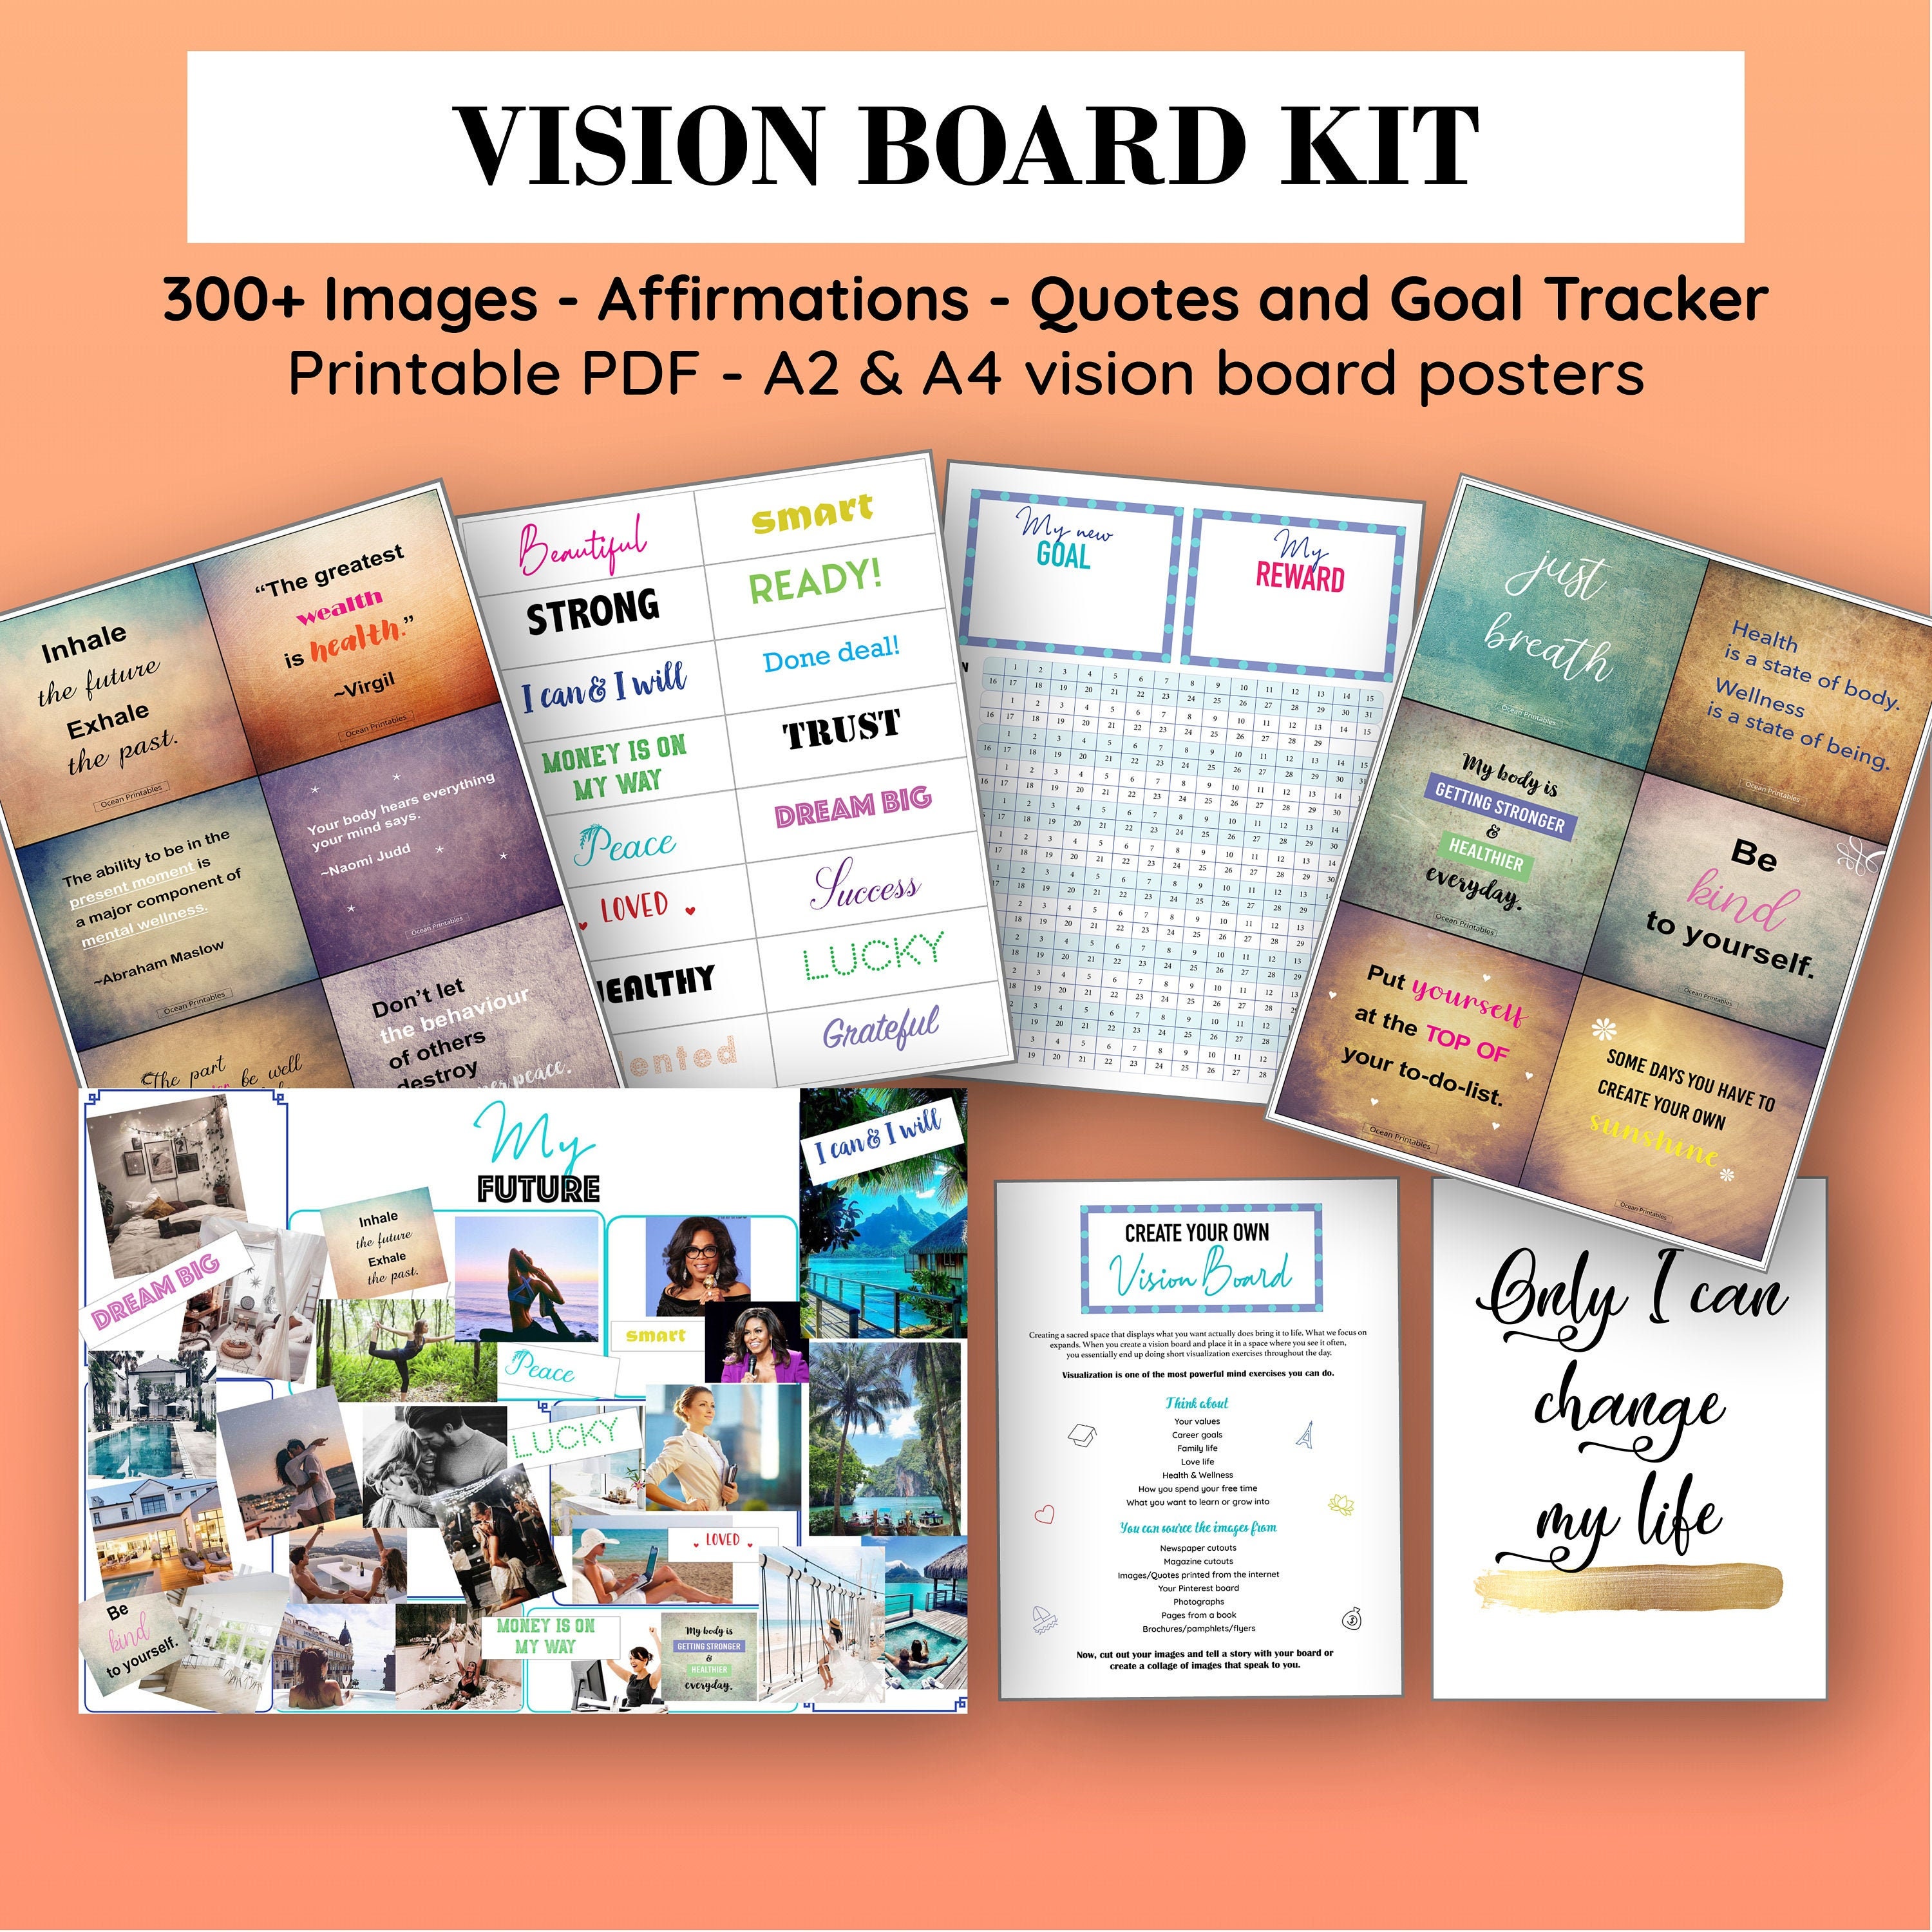 My Vision Board Kit – therealmvb